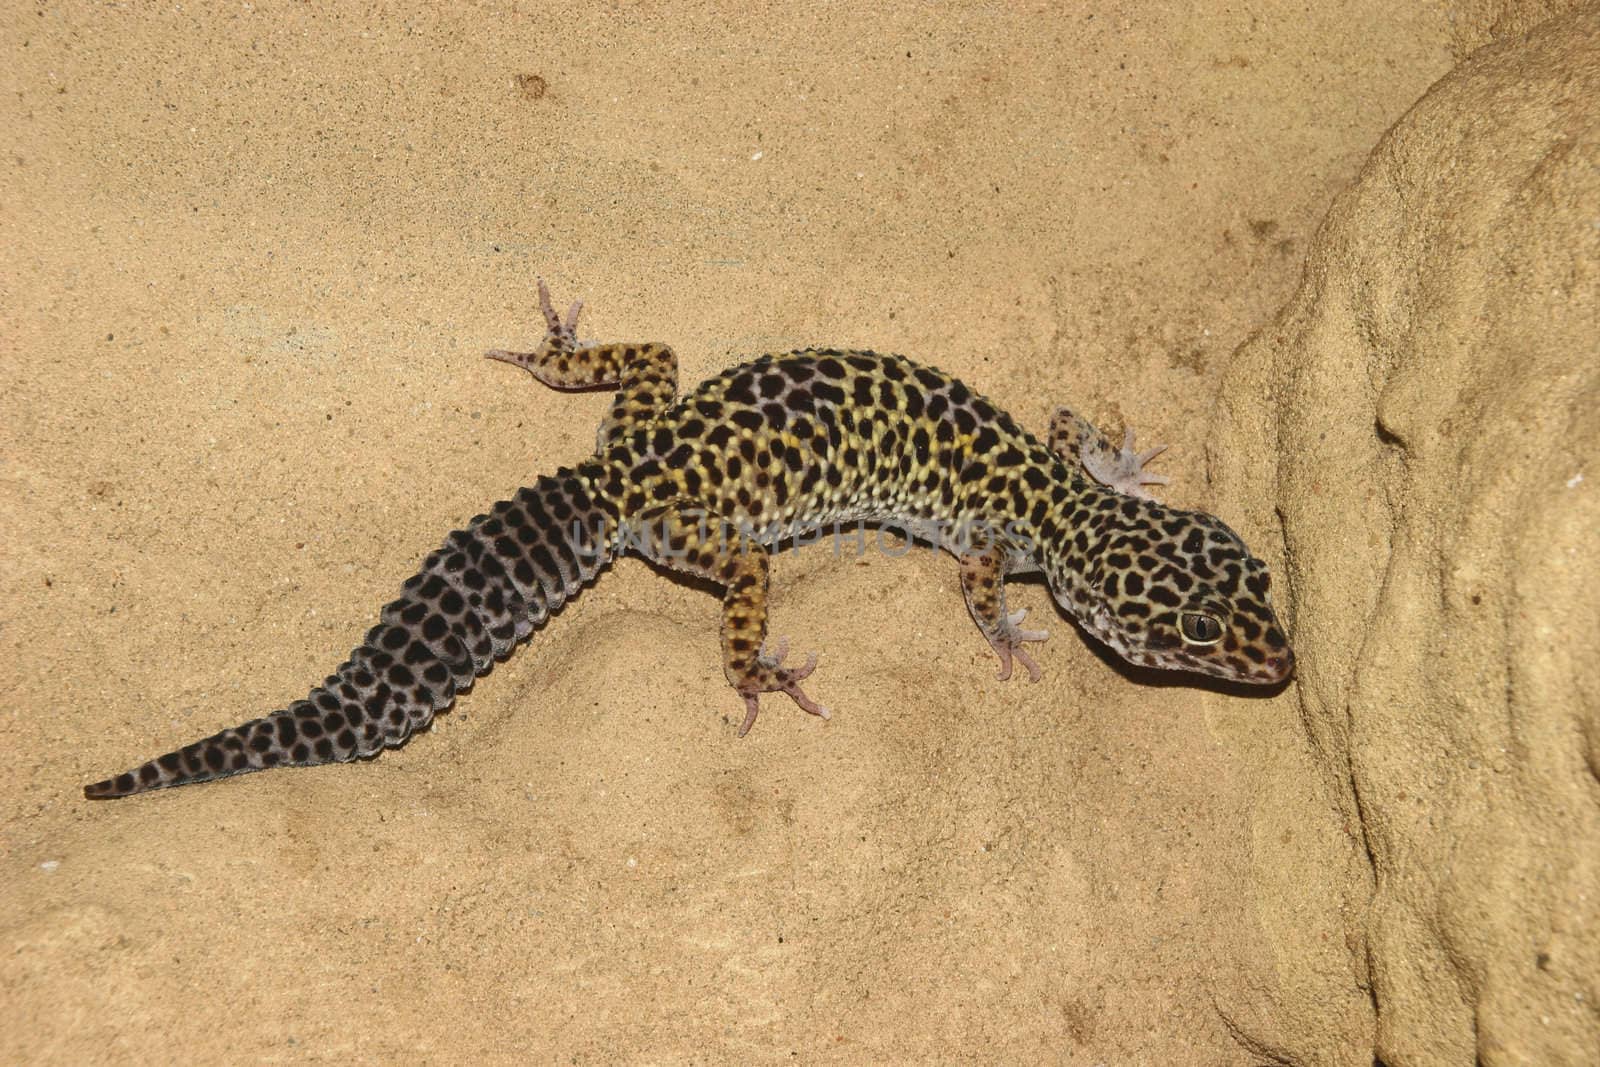 Leopard gecko (Eublepharis macularius) on a rock